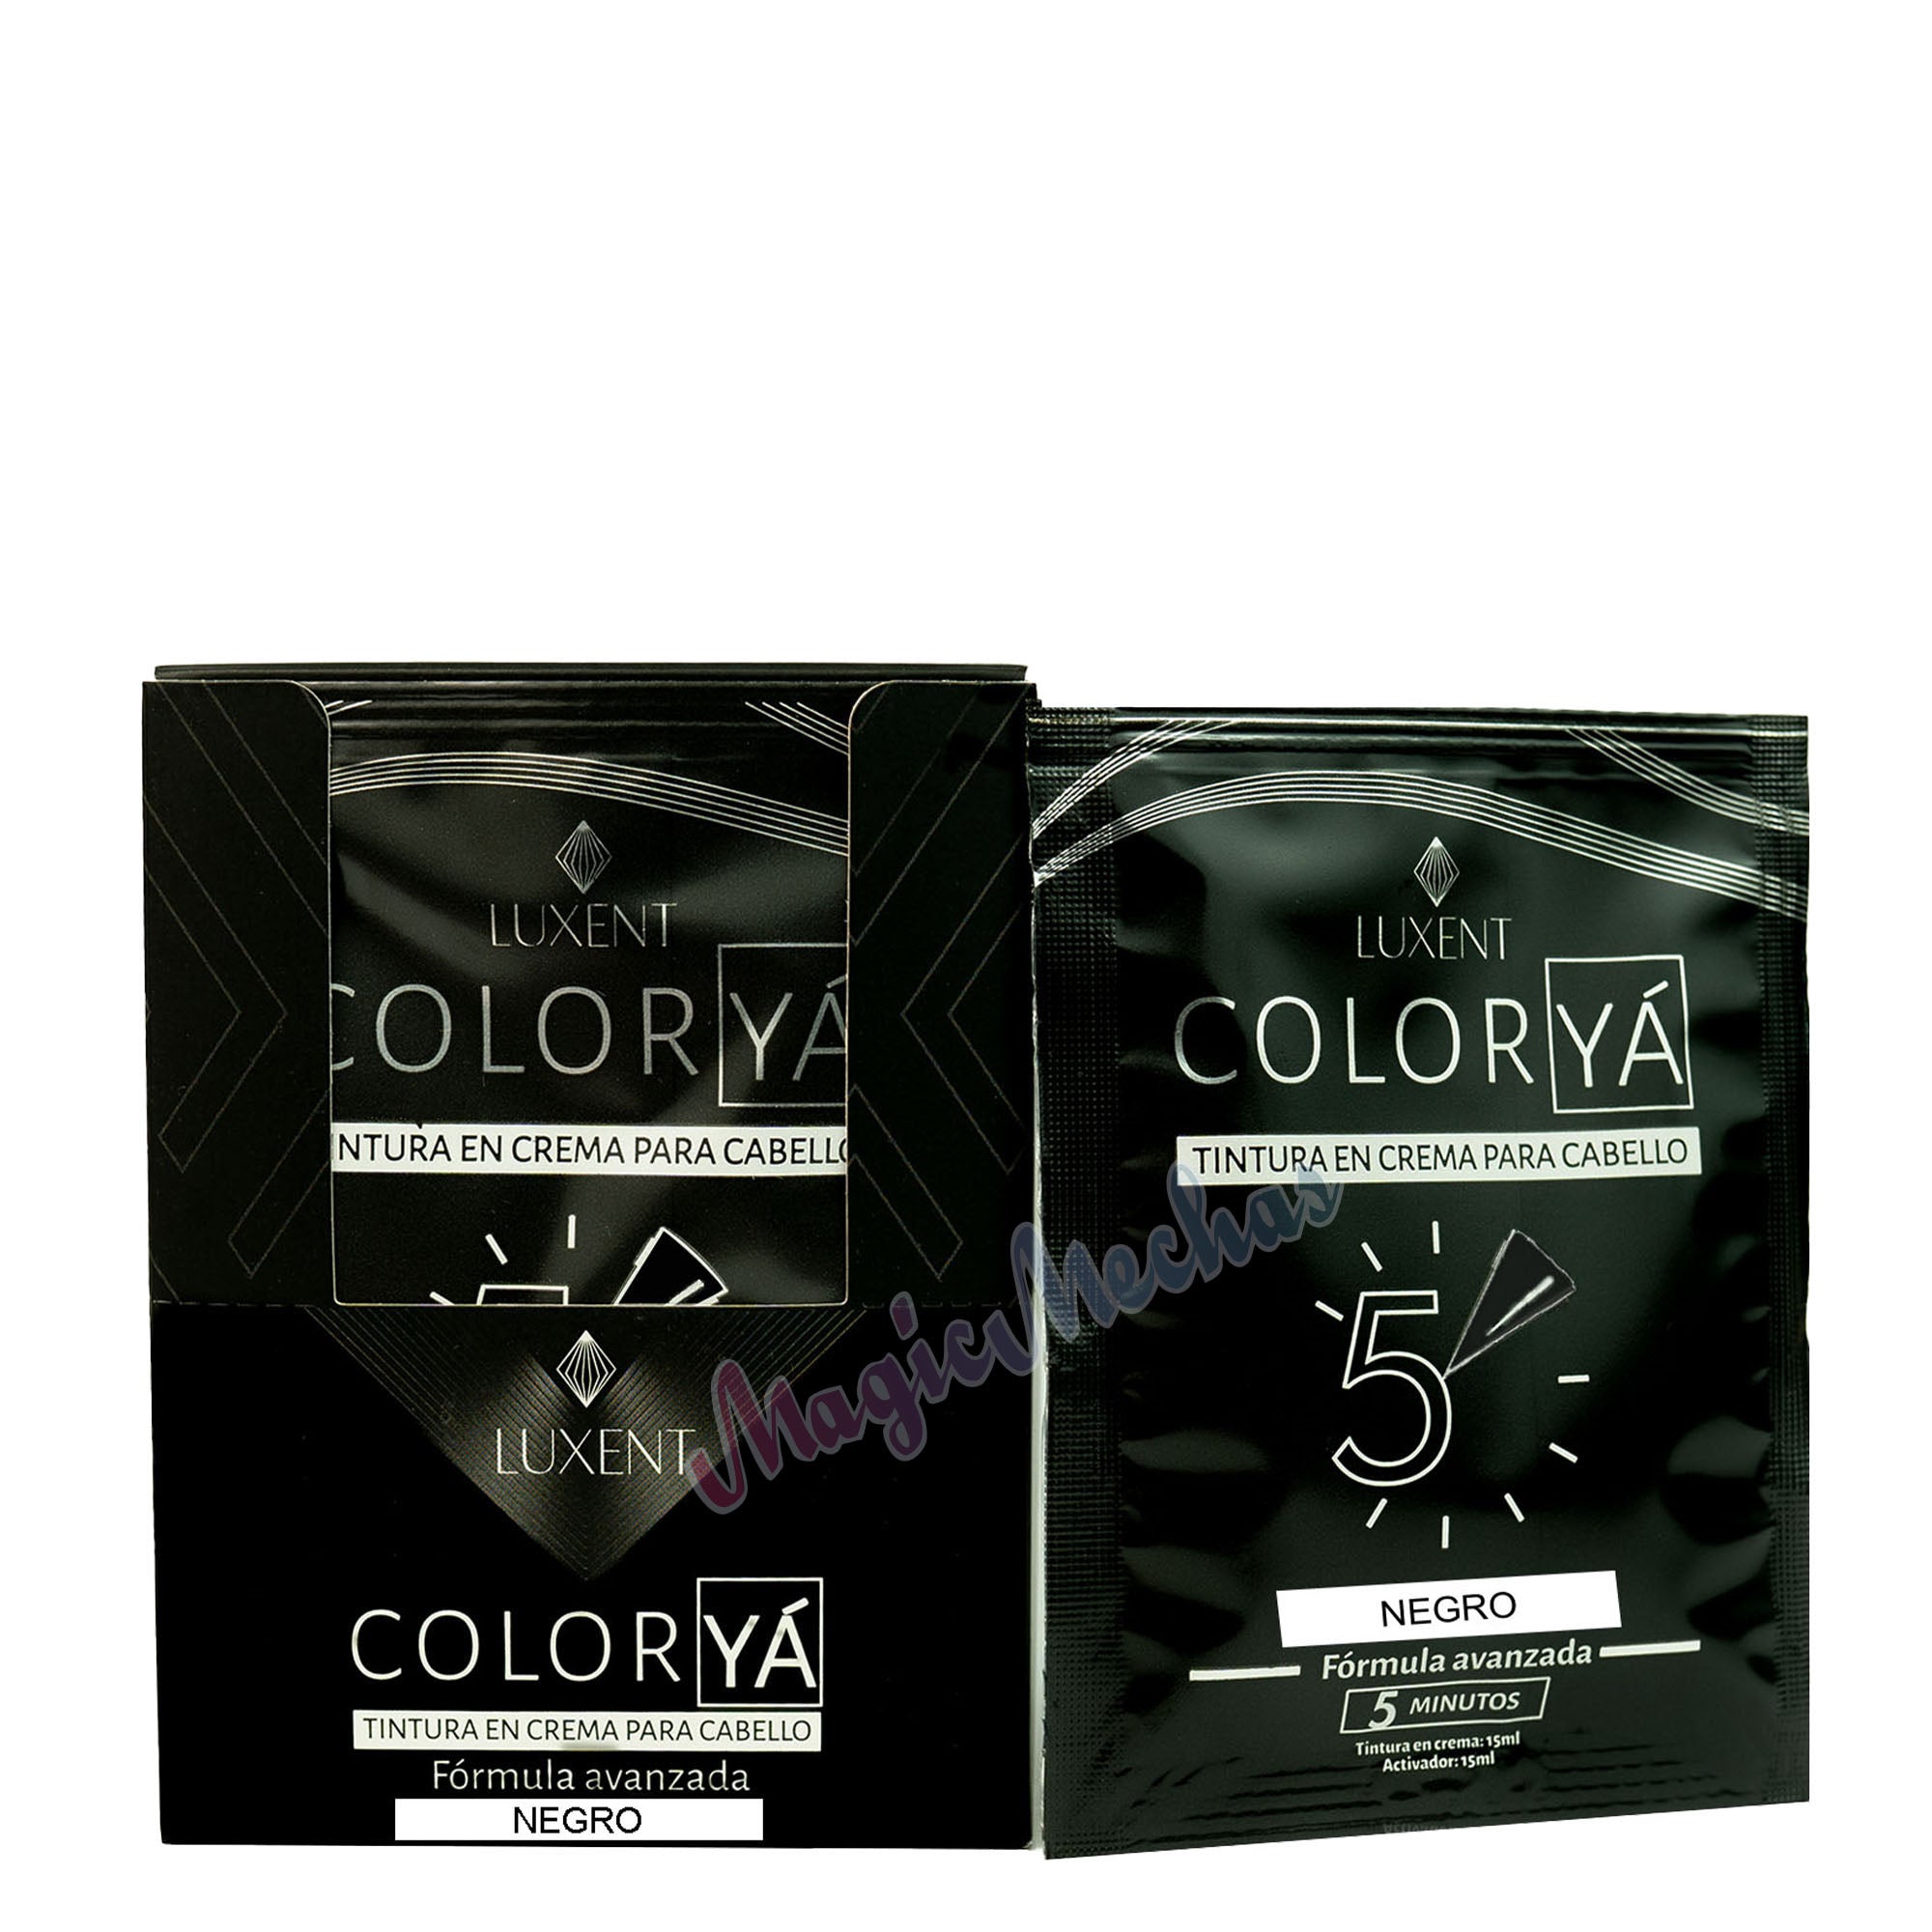 Luxent ColorYa Tintura En Crema Negro Sachet 15ml - Magic Mechas